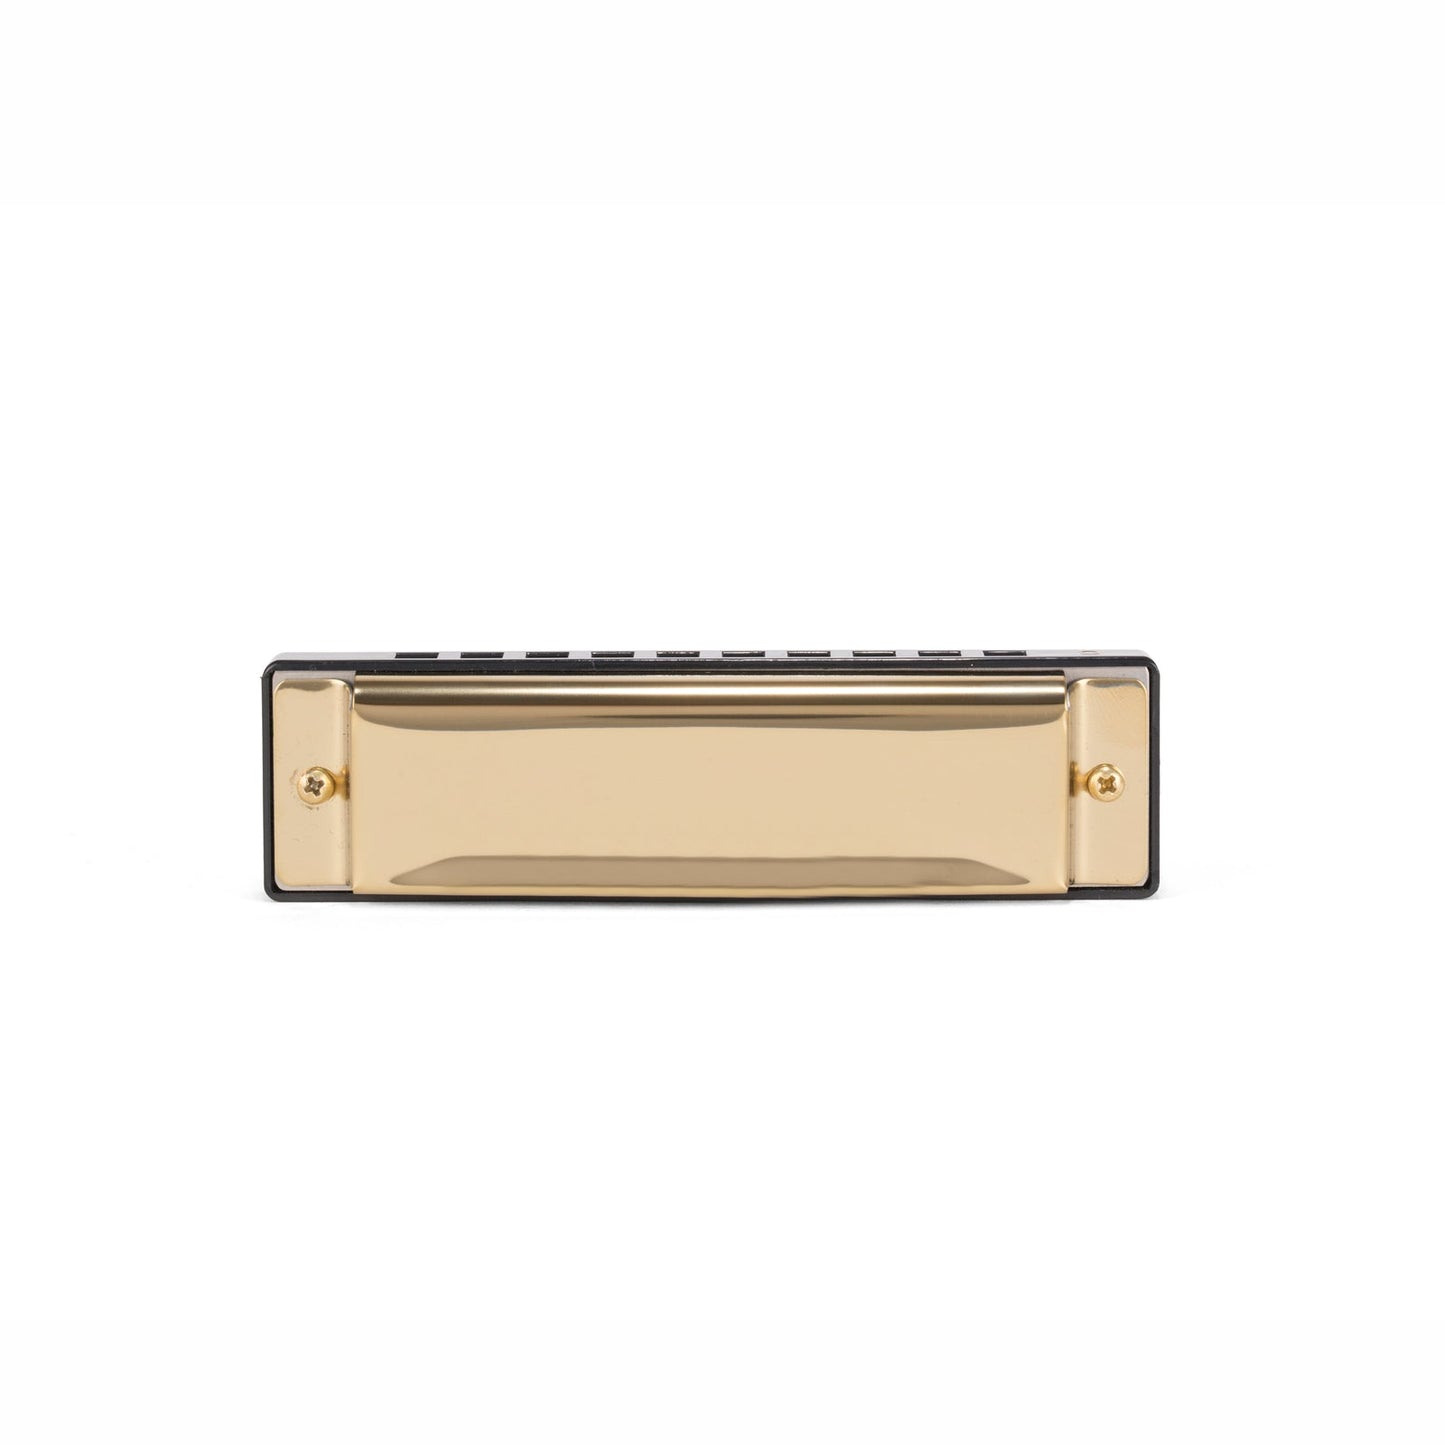 Make your own harmonica DIY set